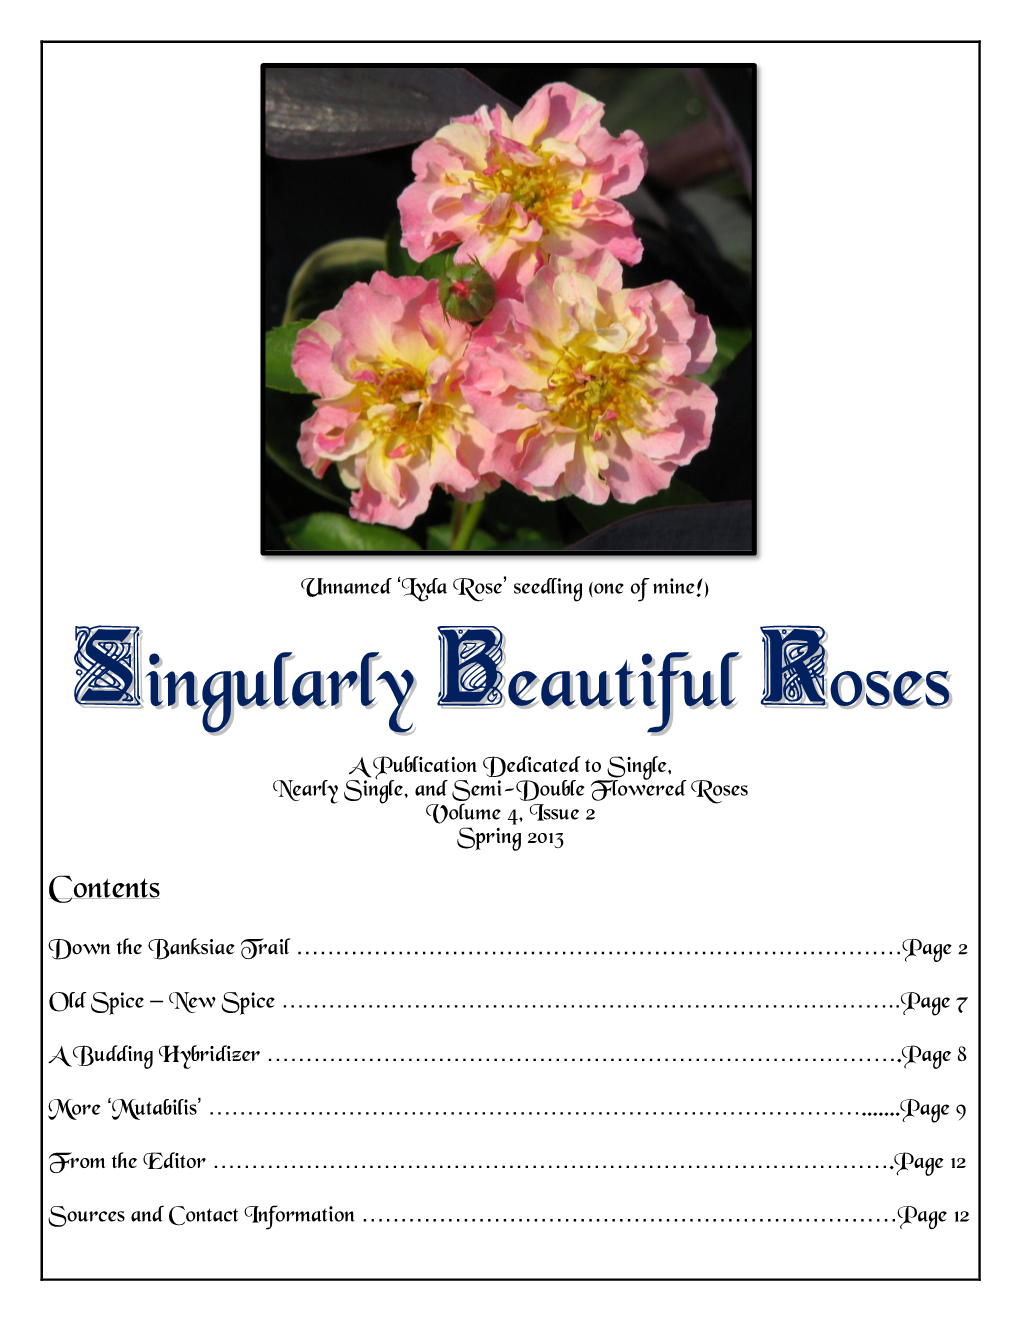 Singularly Beautiful Roses